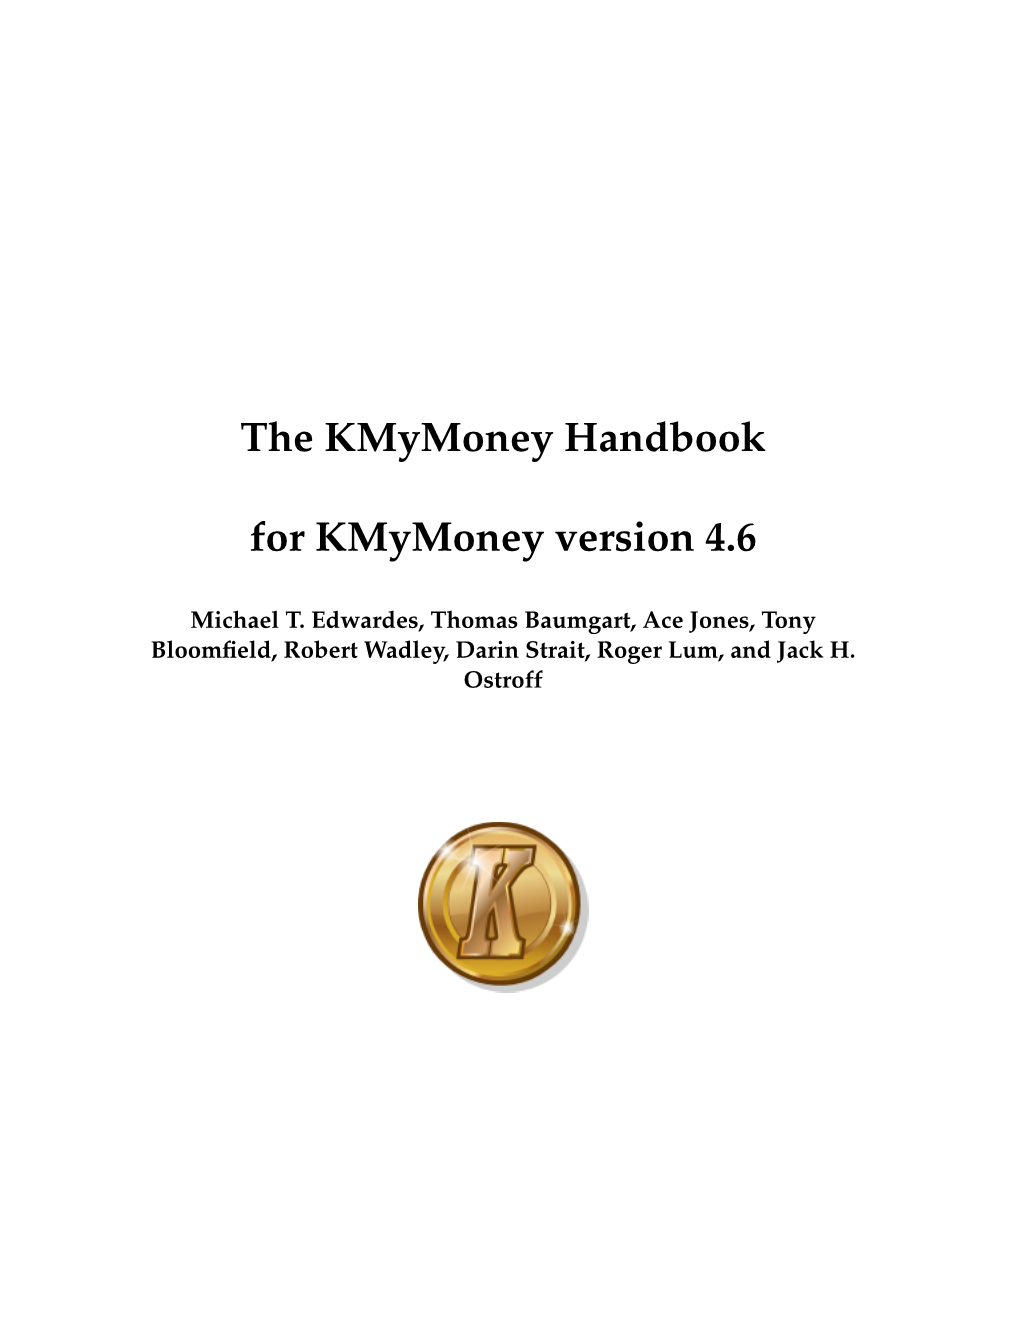 The Kmymoney Handbook for Kmymoney Version